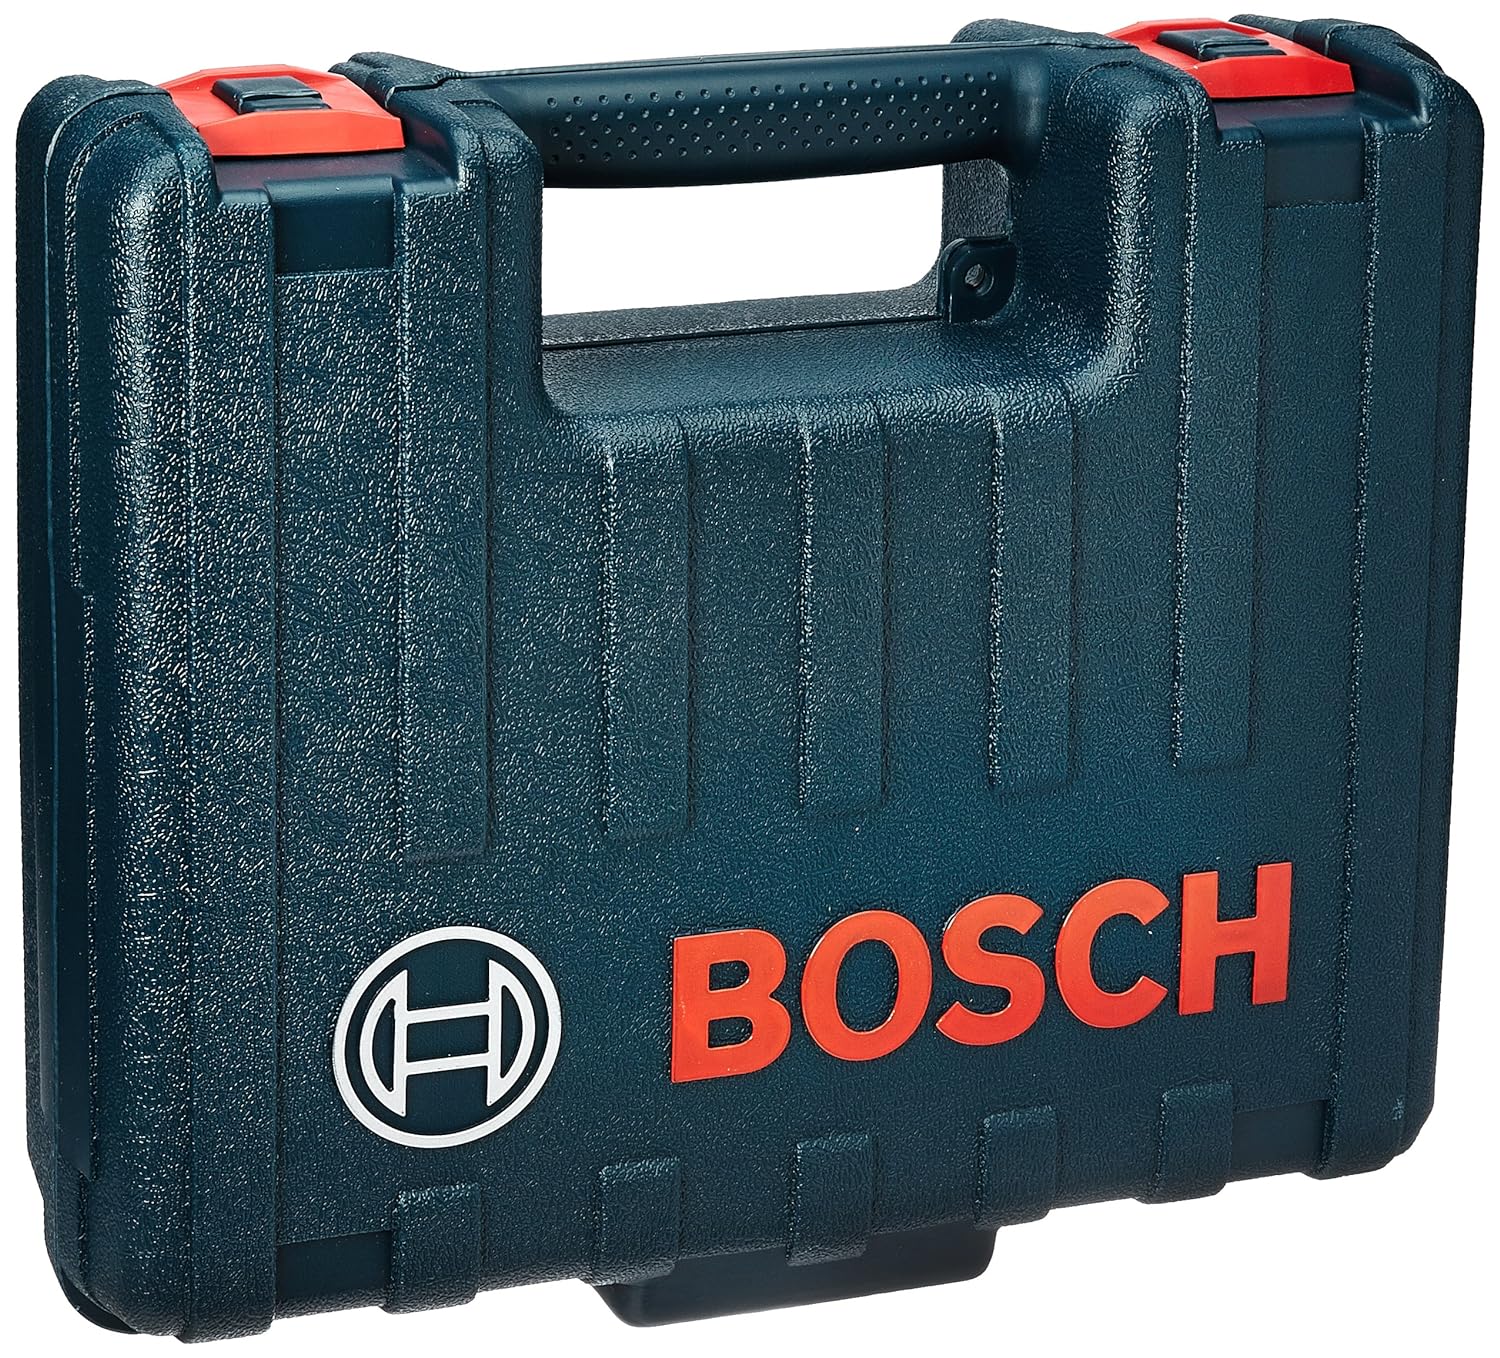 Bosch%20GSB%20600%20Darbeli%20Matkap%20+%20100%20Parça%20Aksesuar